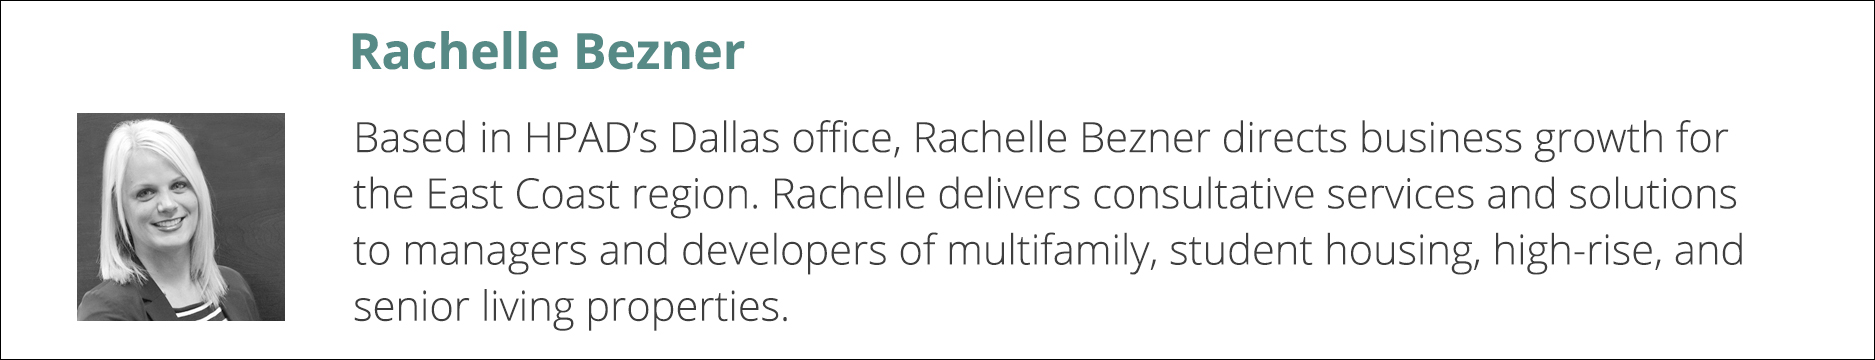 Rachelle Bezner - HPA Interior Design Group, Dallas, TX